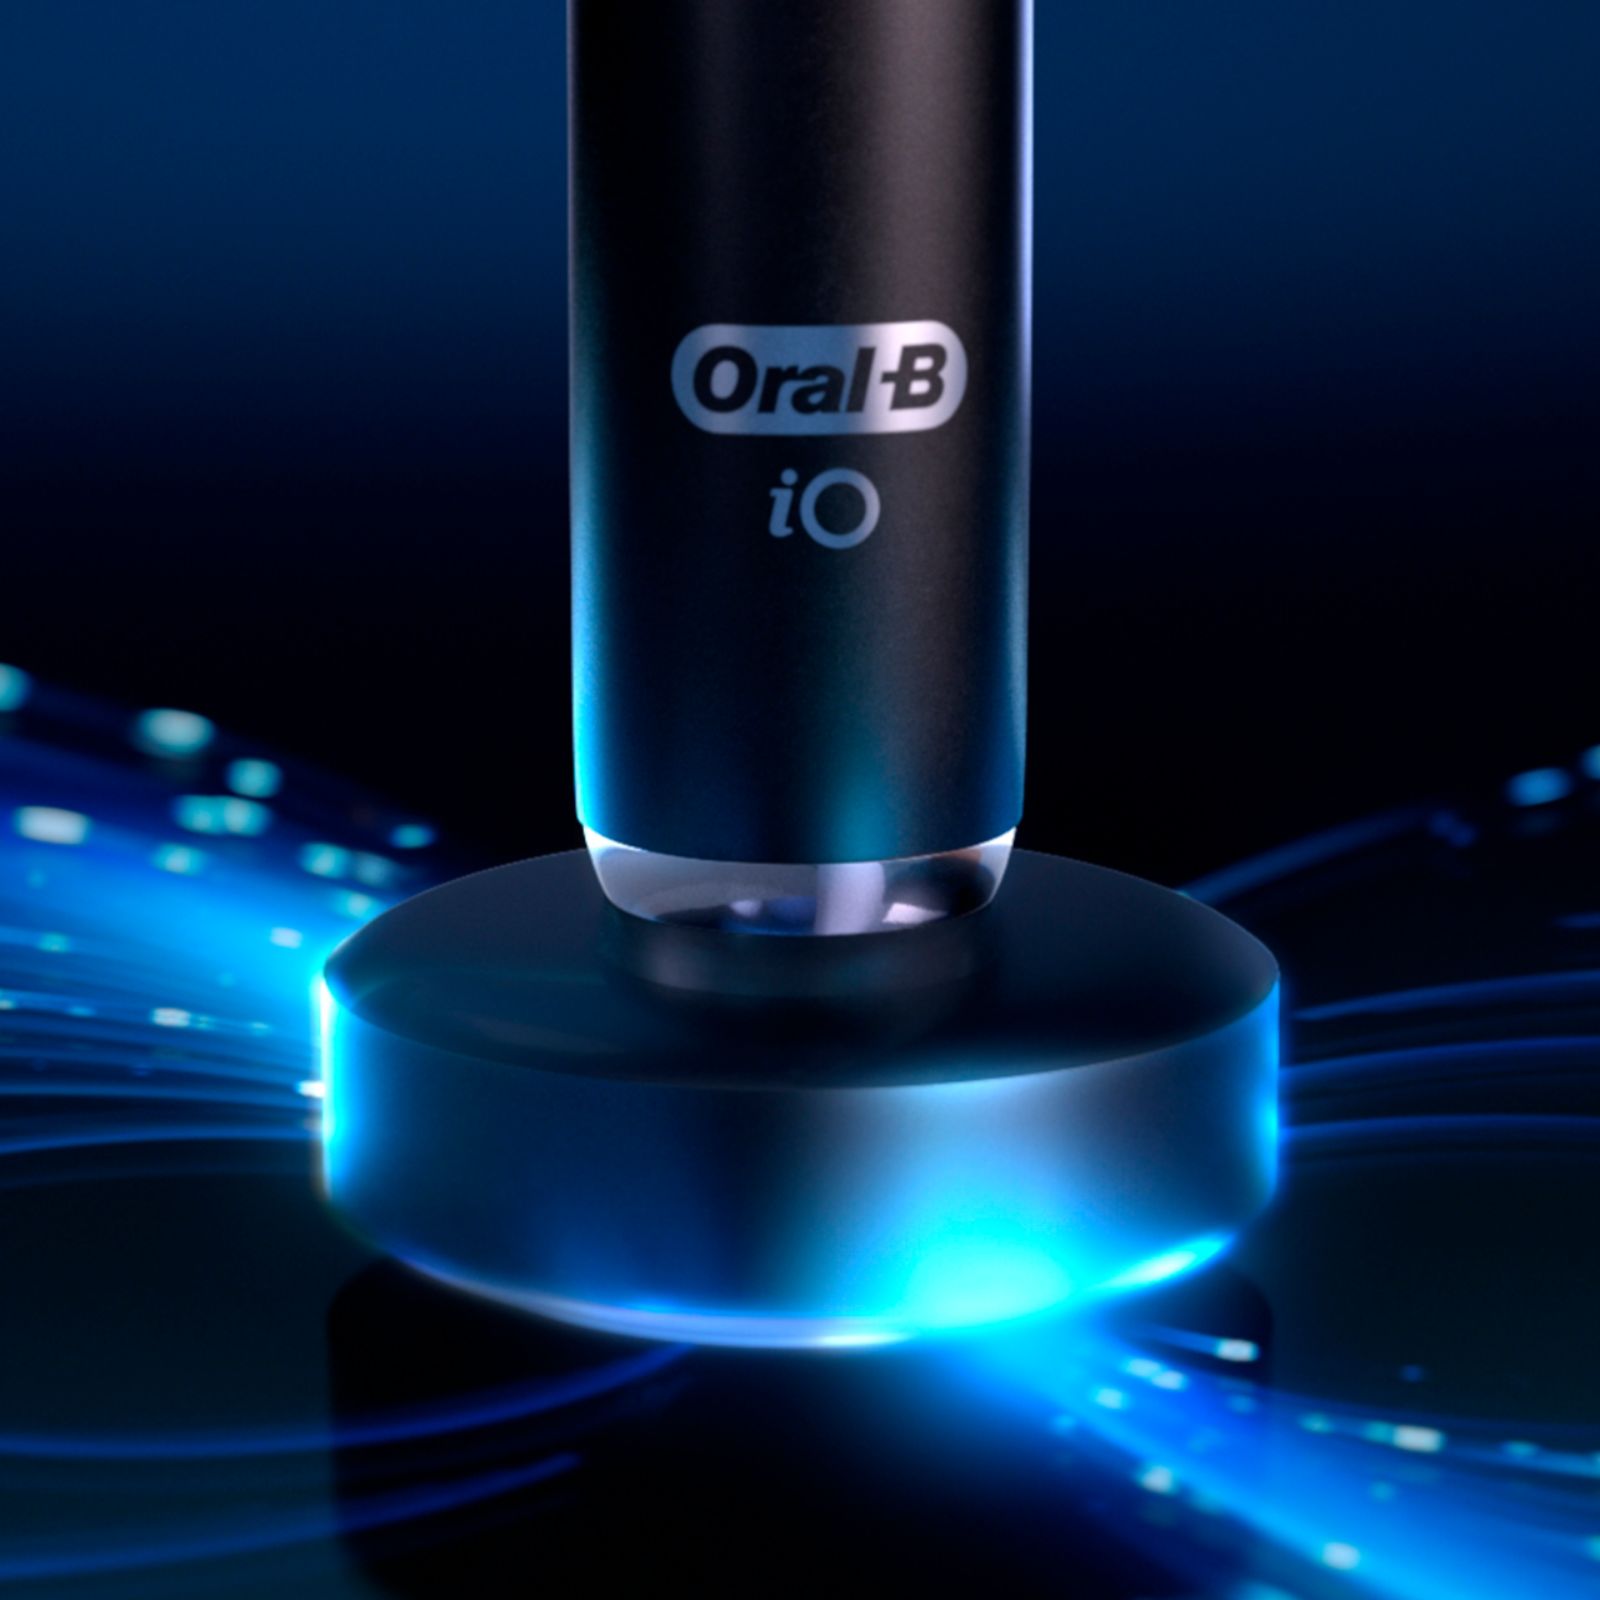 Oral-B iO Series 9 review